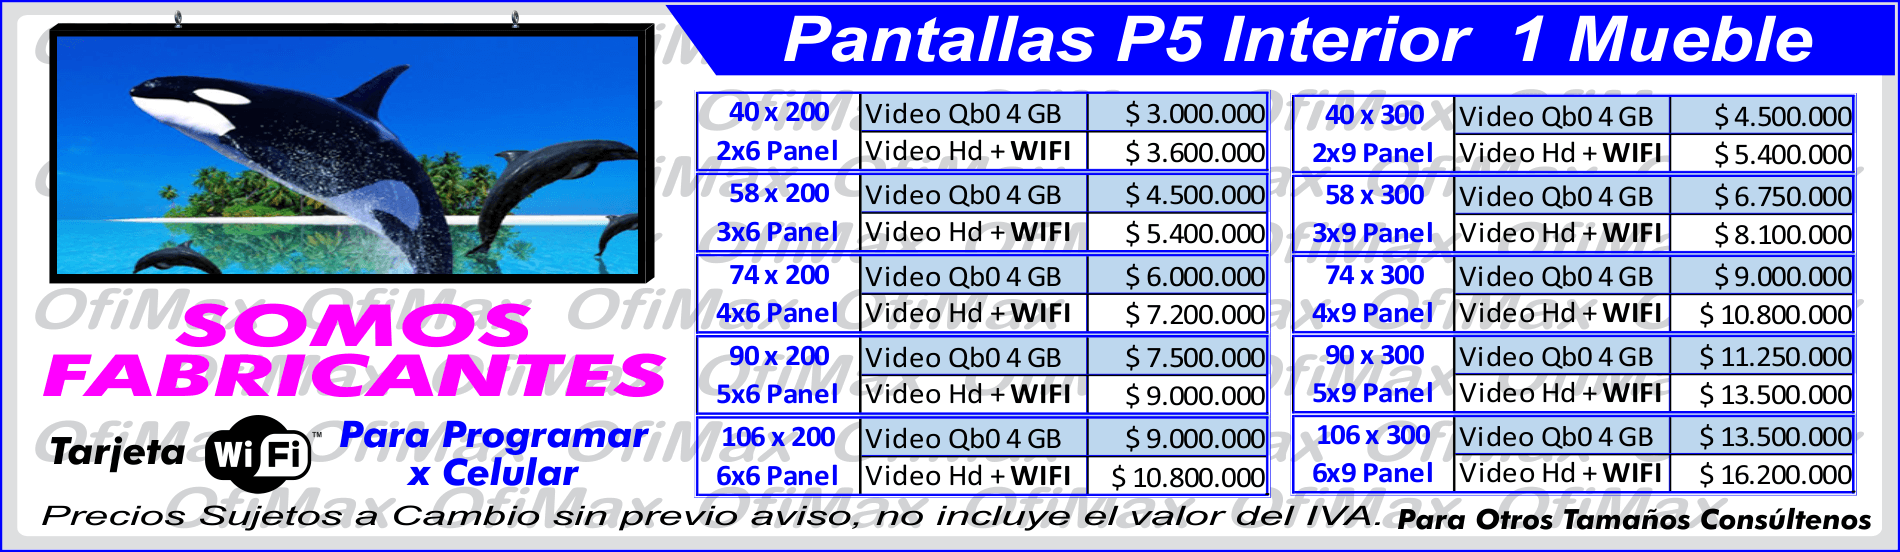 pantallas led de video p5 interior, bogota, colombia